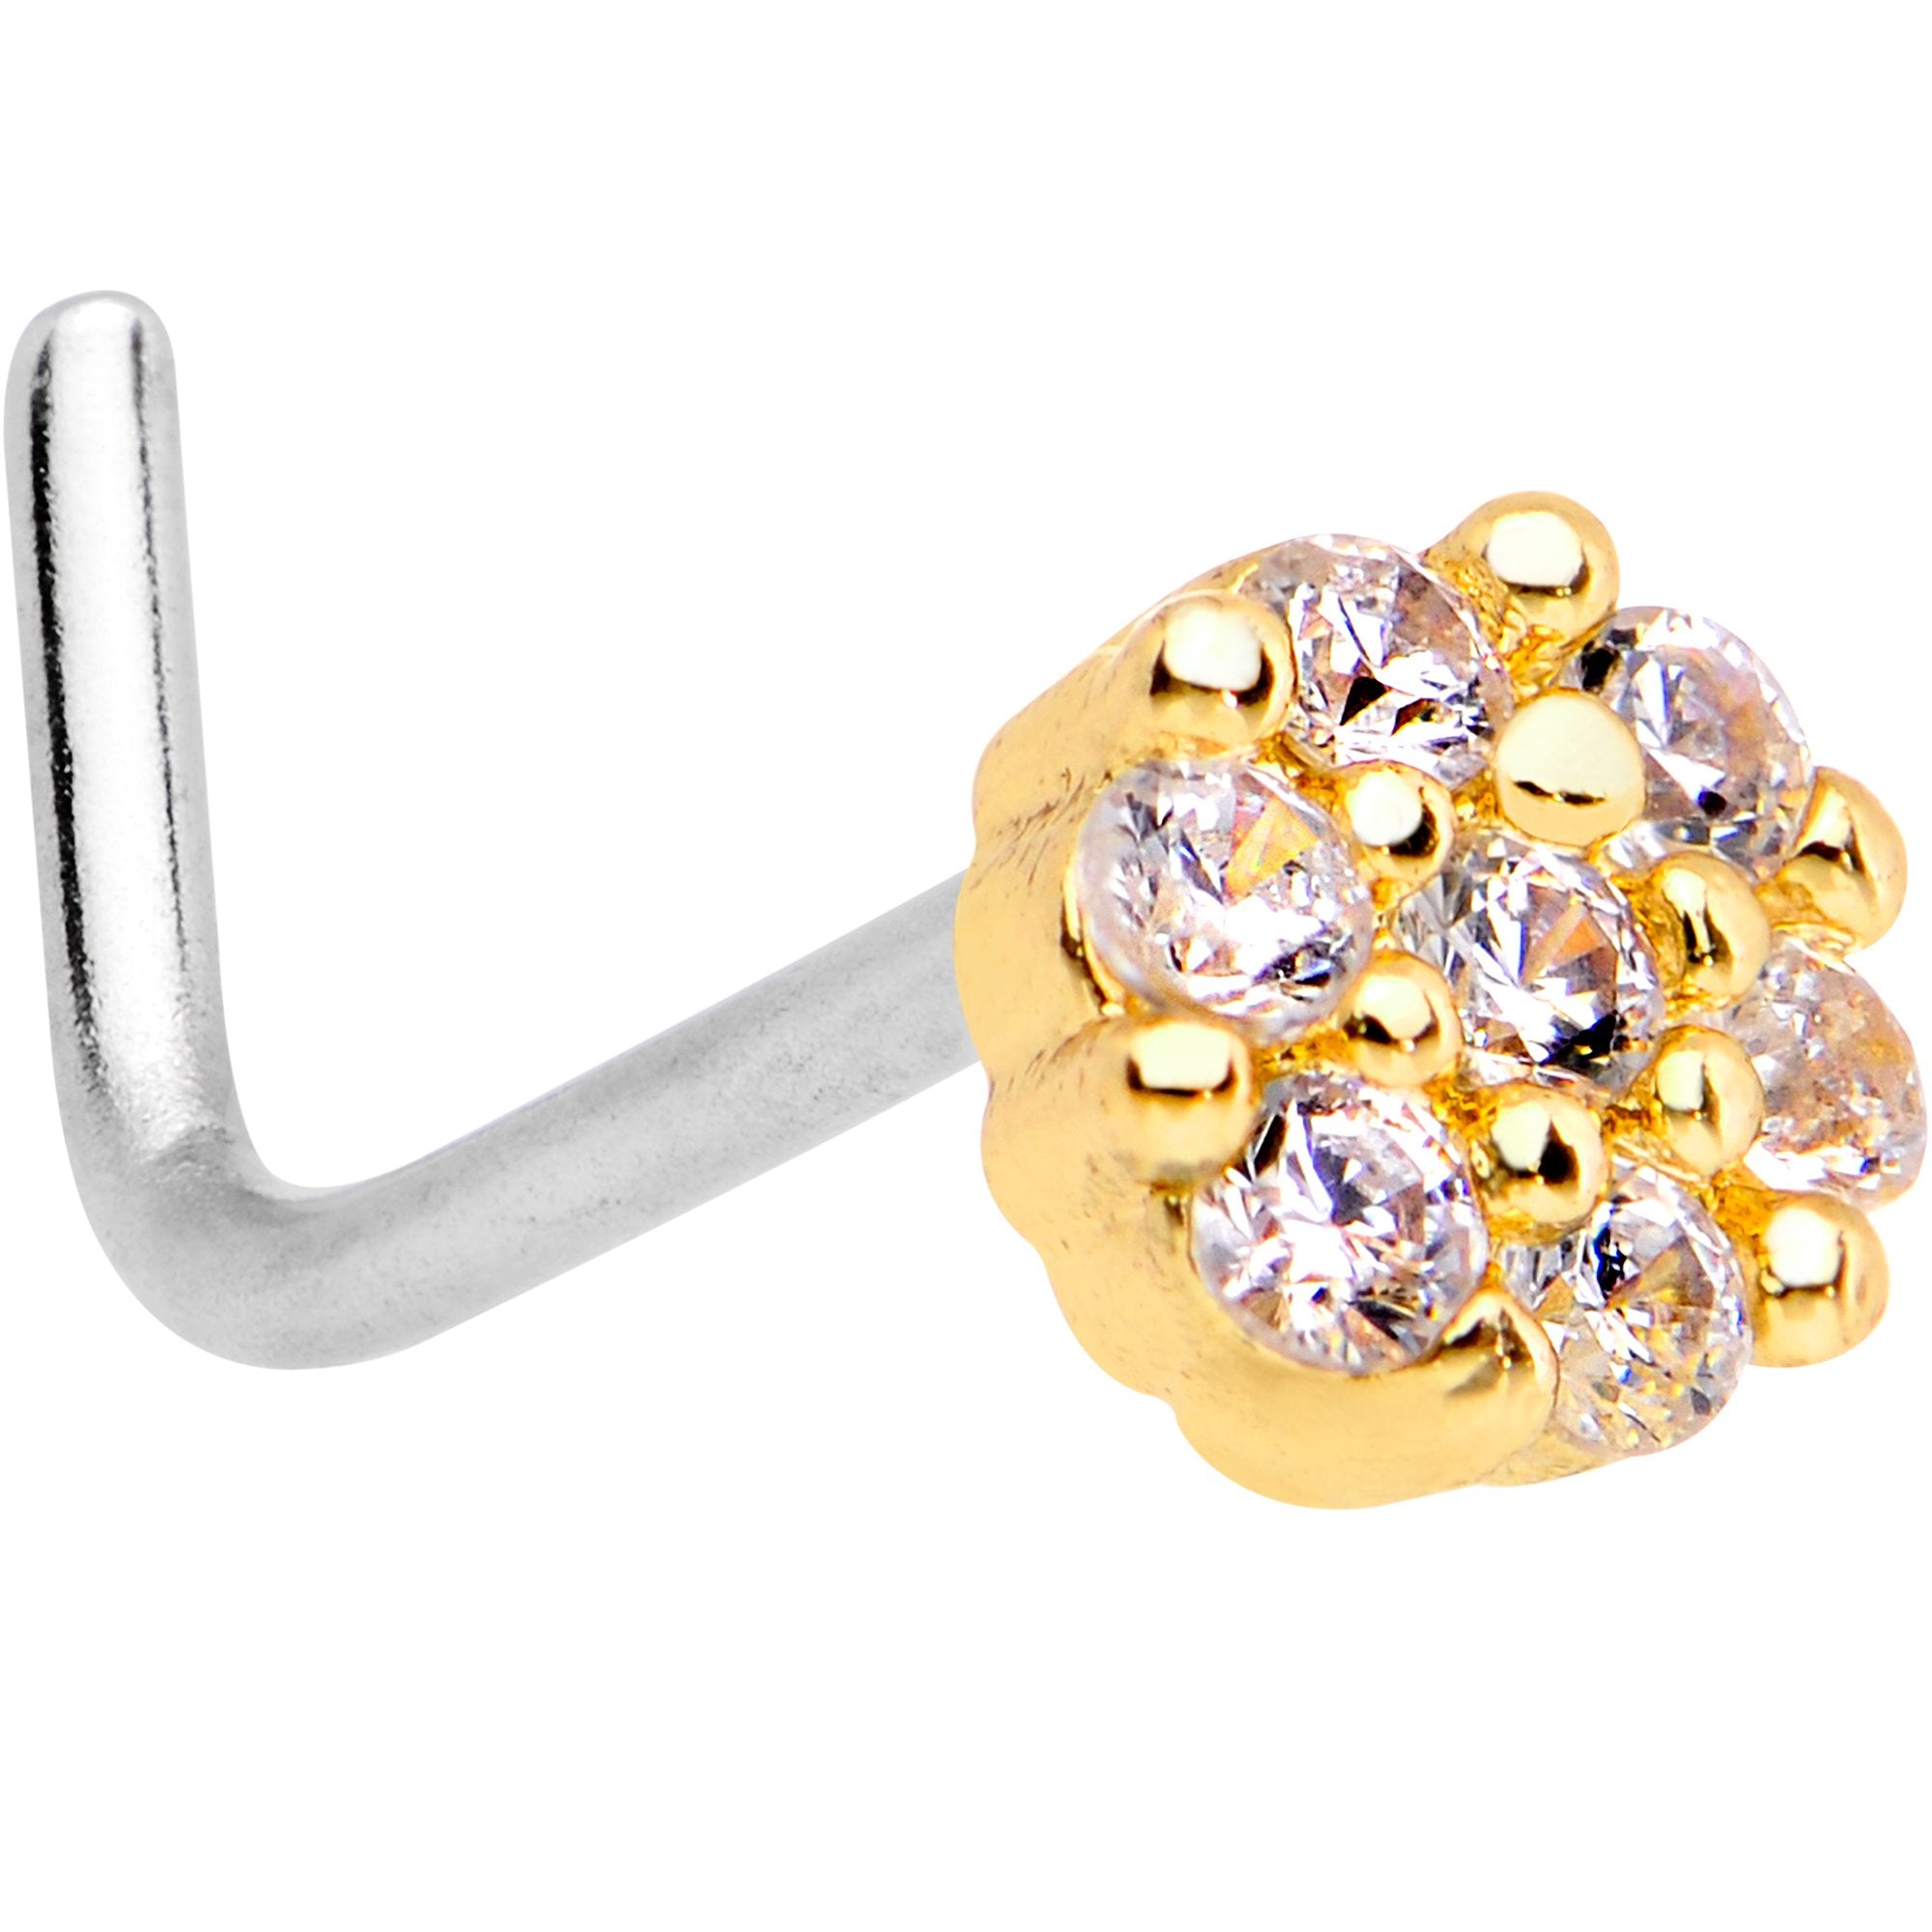 1/4 Clear CZ Gem Gold Tone Cute Cluster L Shaped Nose Ring